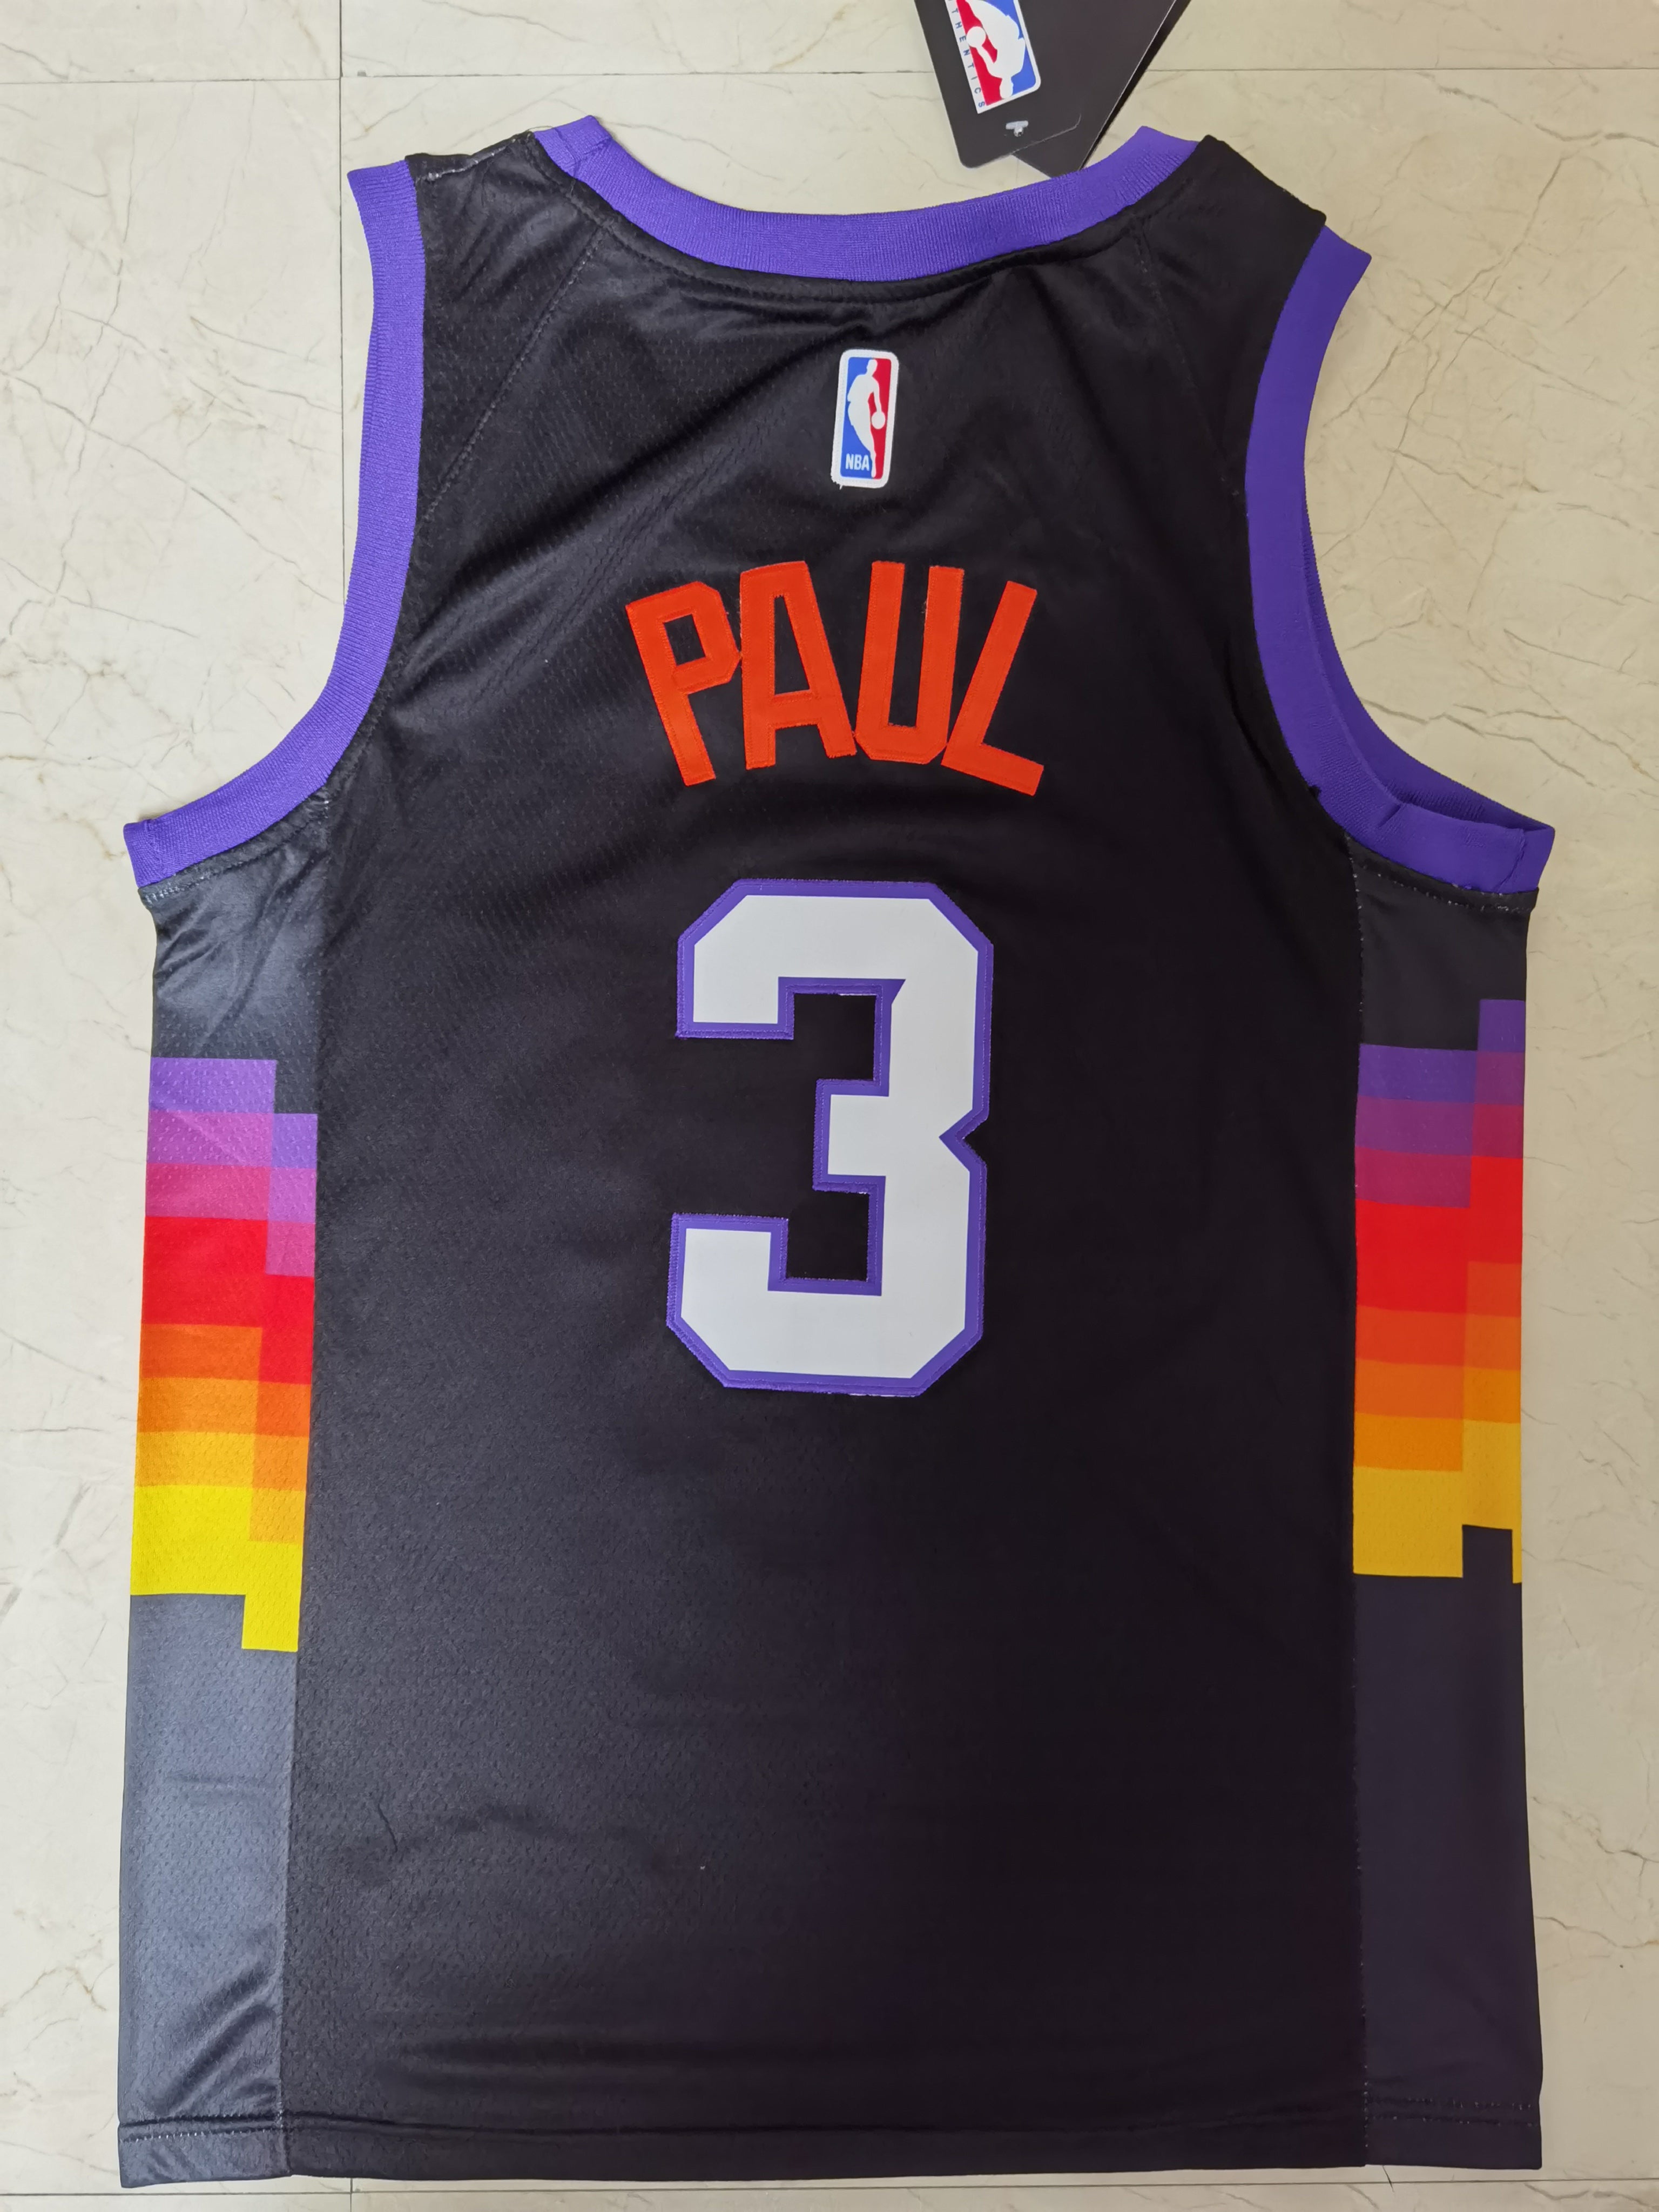 City Edition Chris Paul #3 Phoenix Suns Basketball Trikot Jersey Genäht Schwarz 